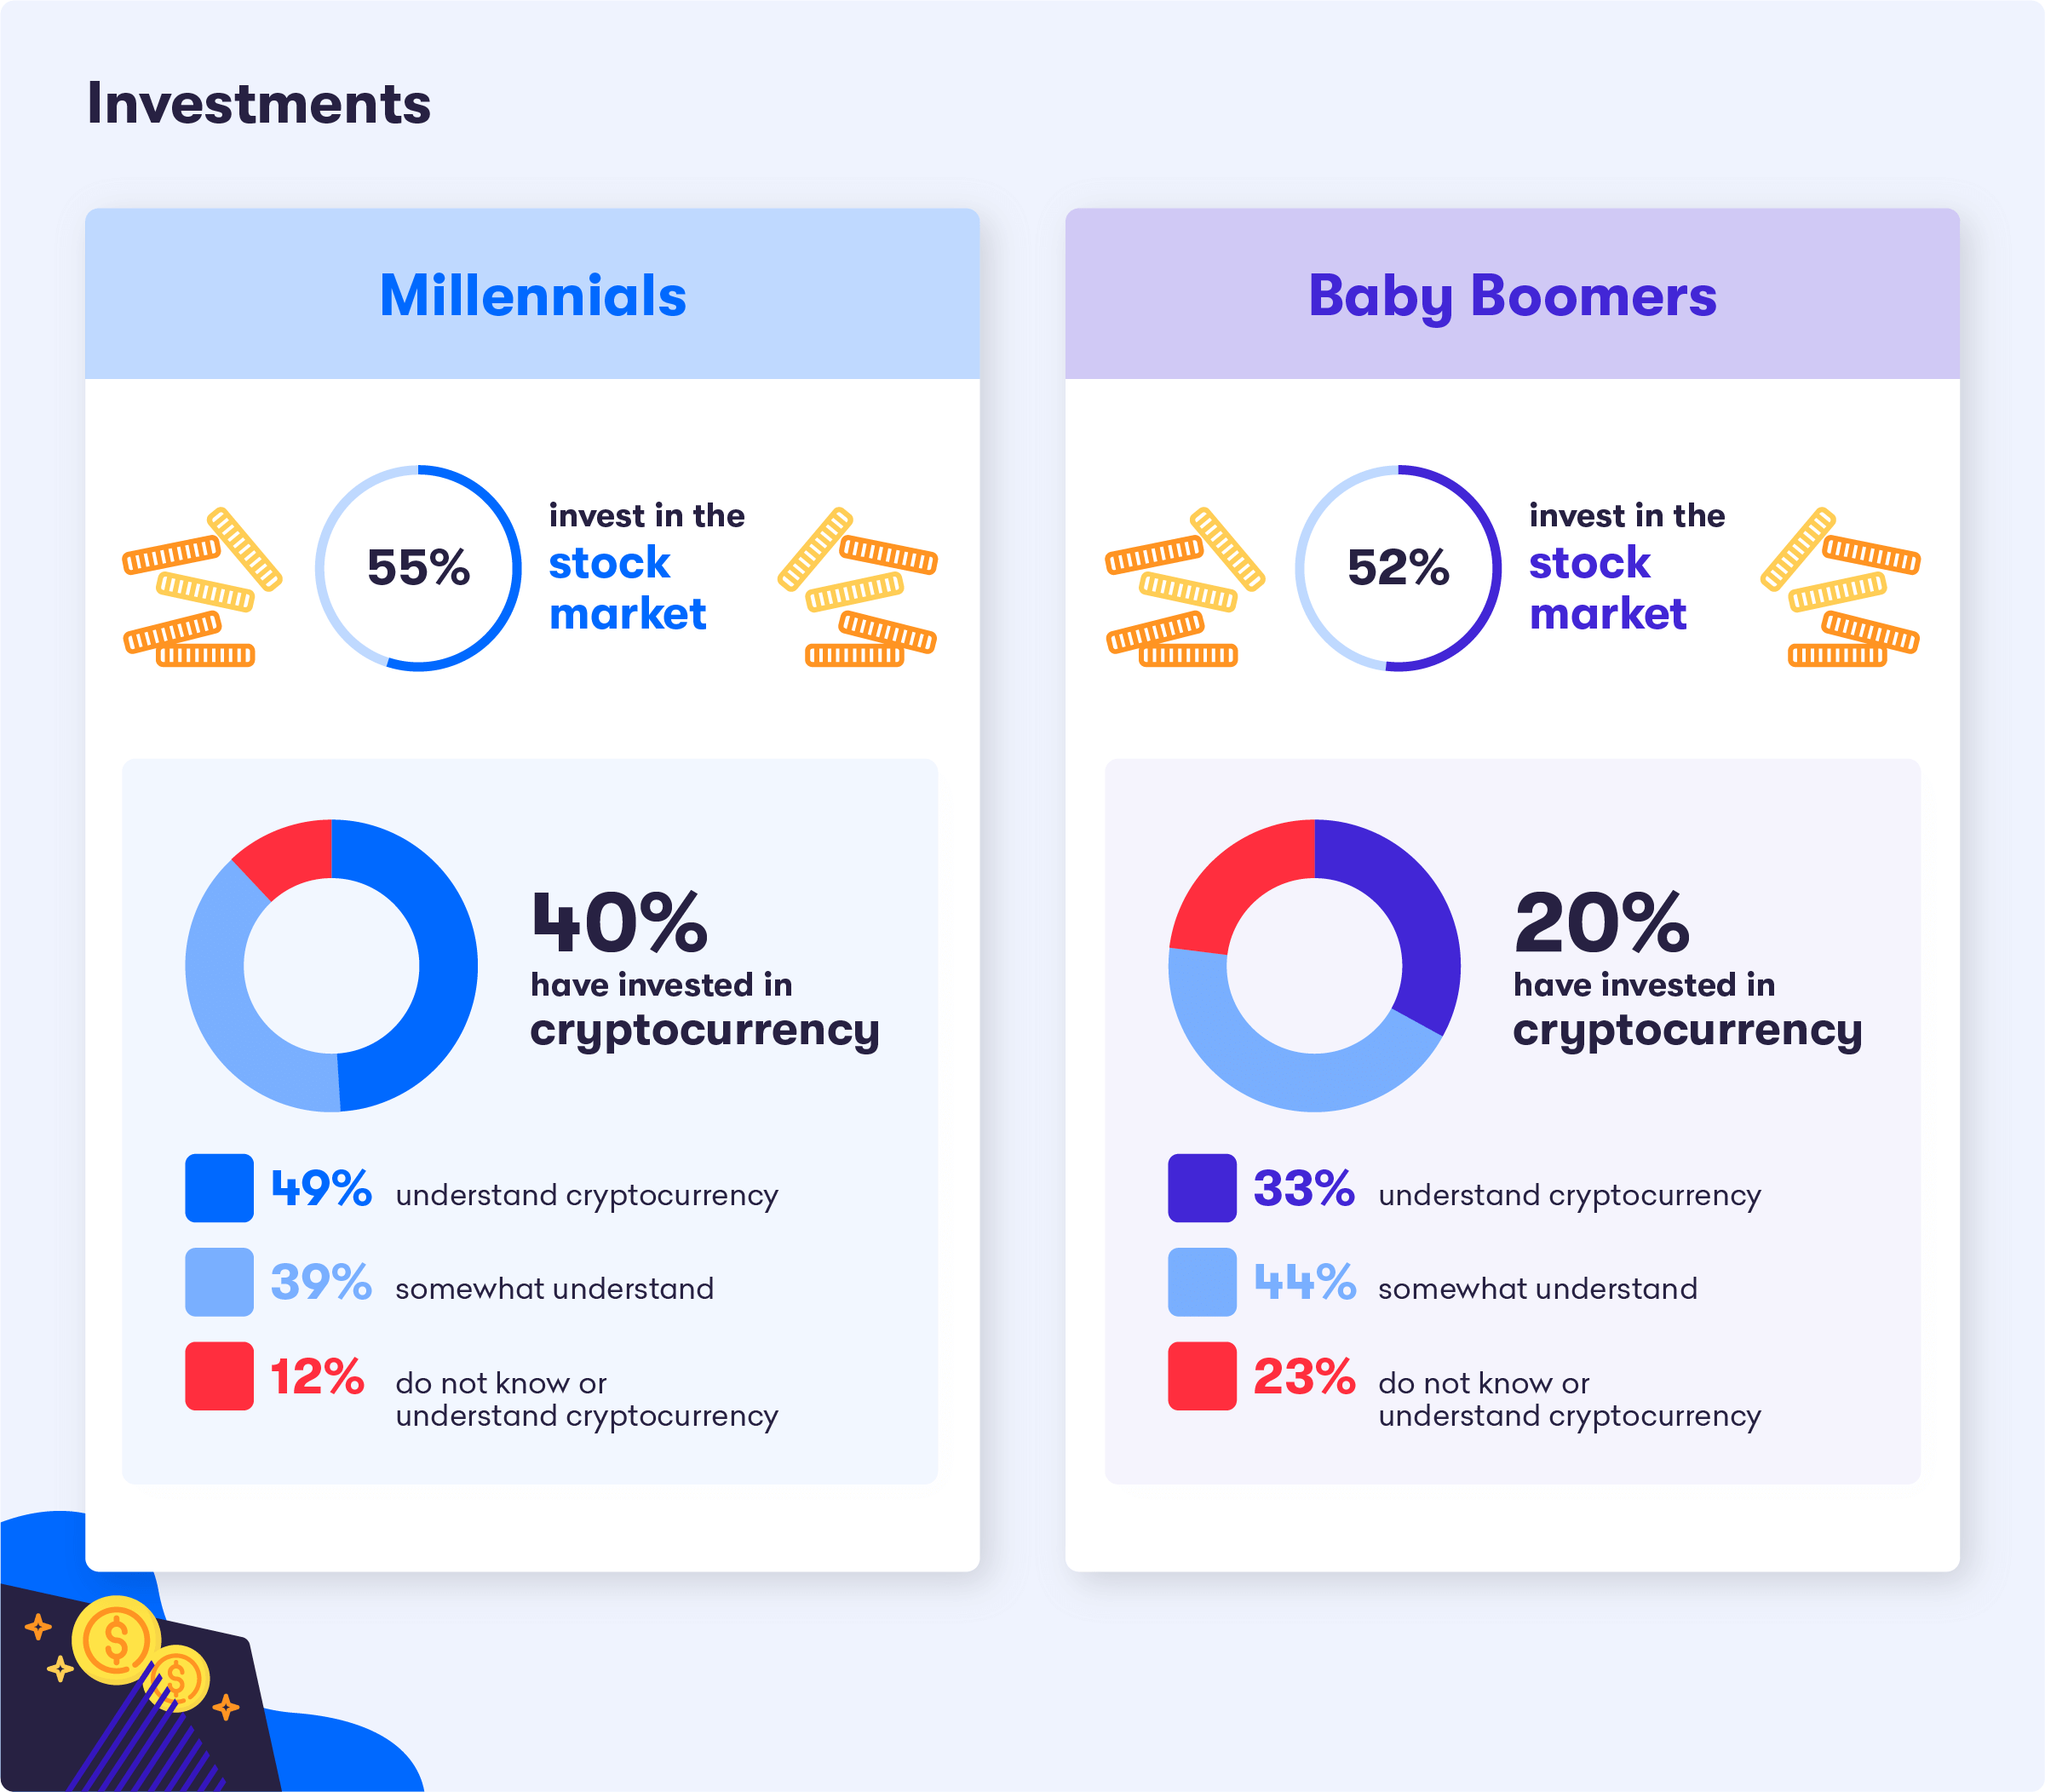 Millennials Vs Boomers Investments